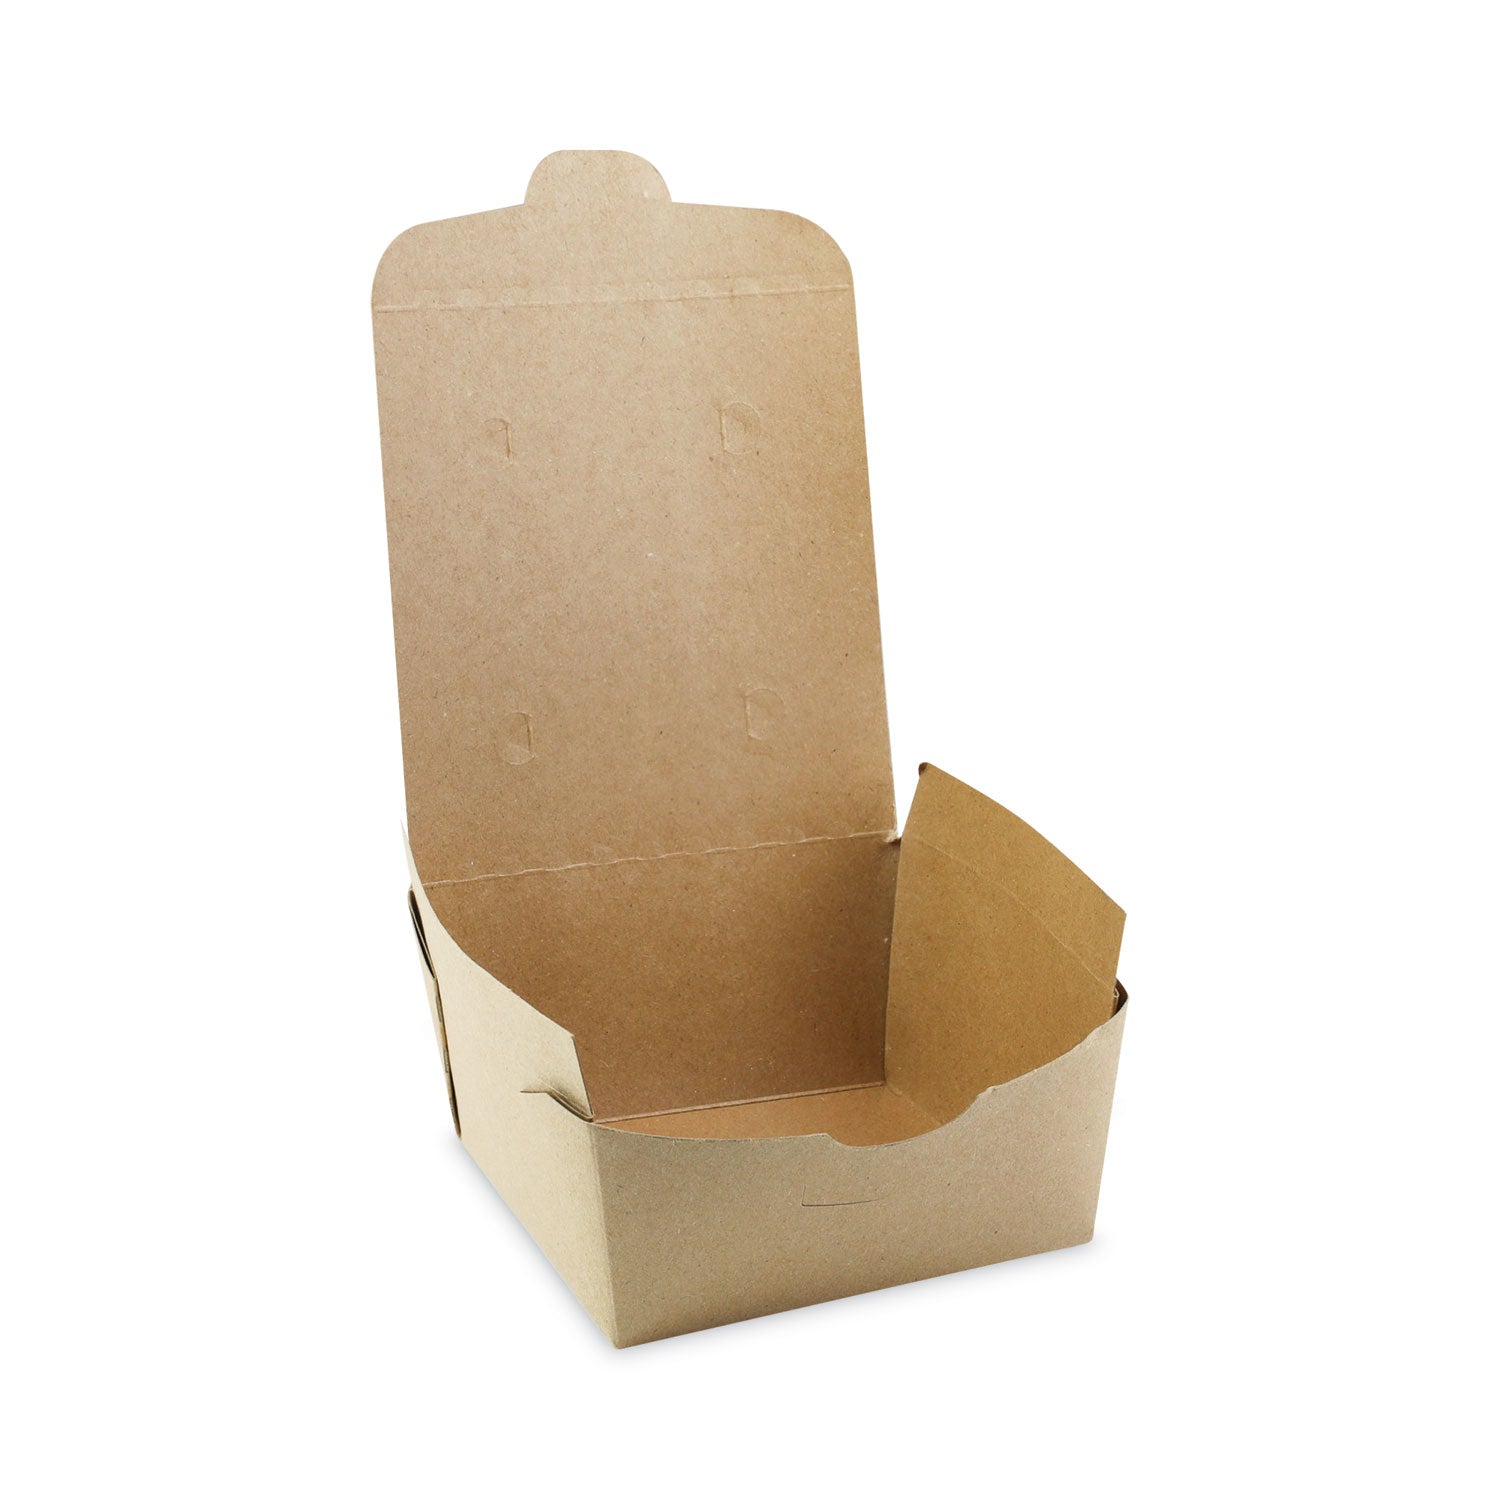 earthchoice-onebox-paper-box-37-oz-45-x-45-x-25-kraft-312-carton_pctnob01kec - 2